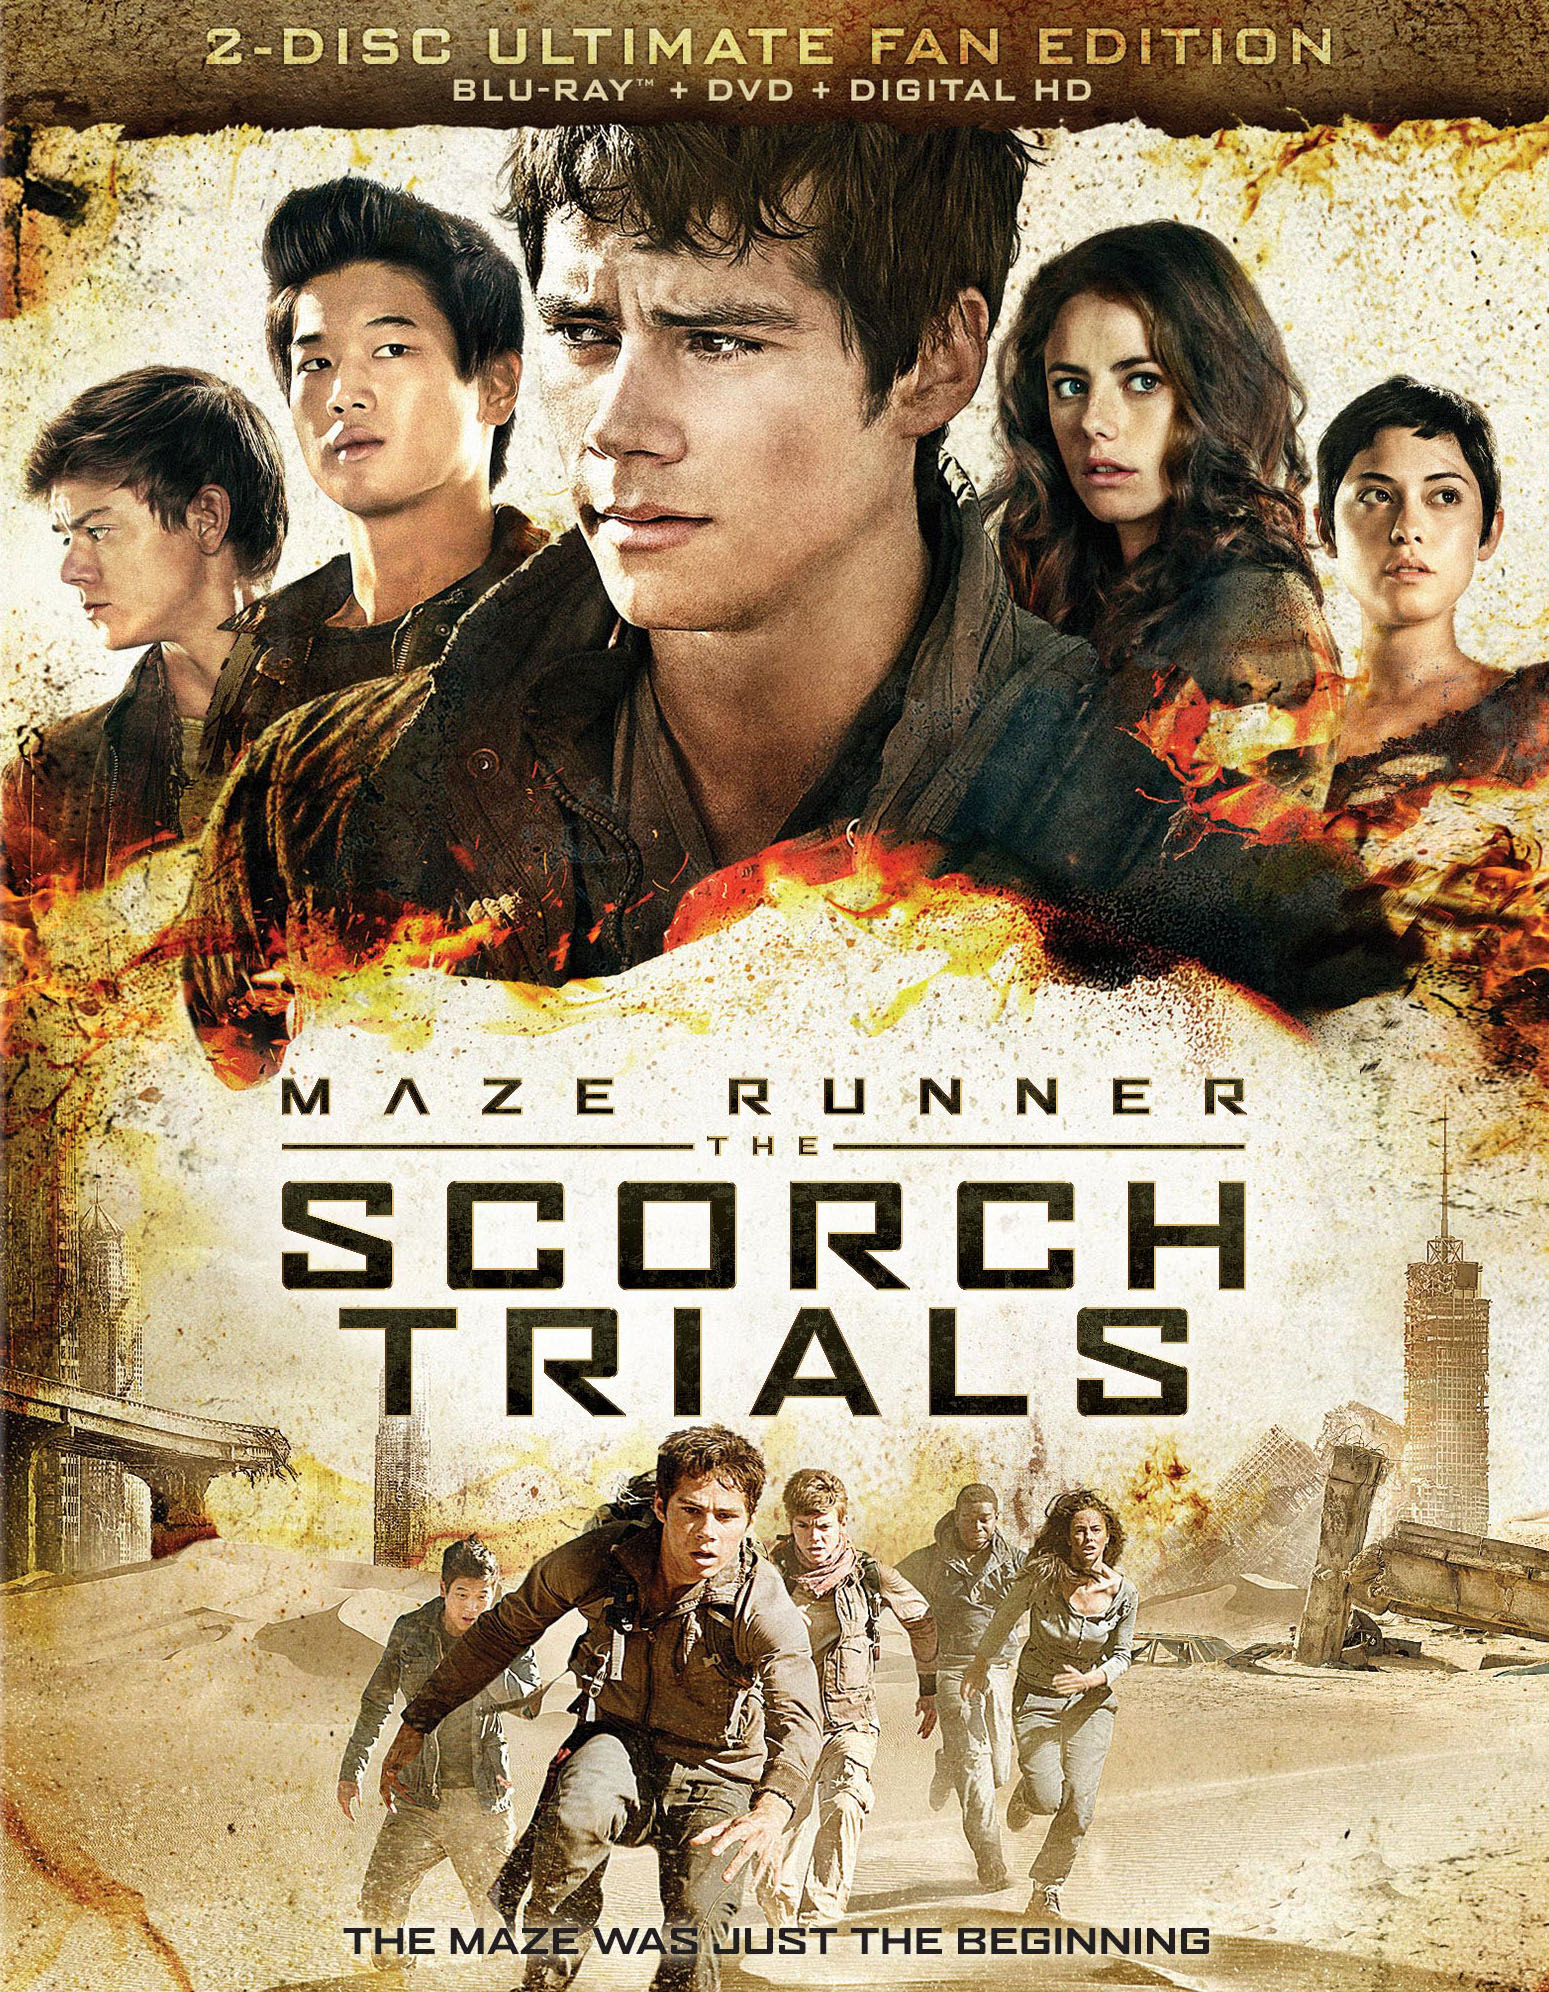 Escaping WCKD! Scene - MAZE RUNNER 2: THE SCORCH TRIALS (2015) Movie Clip 